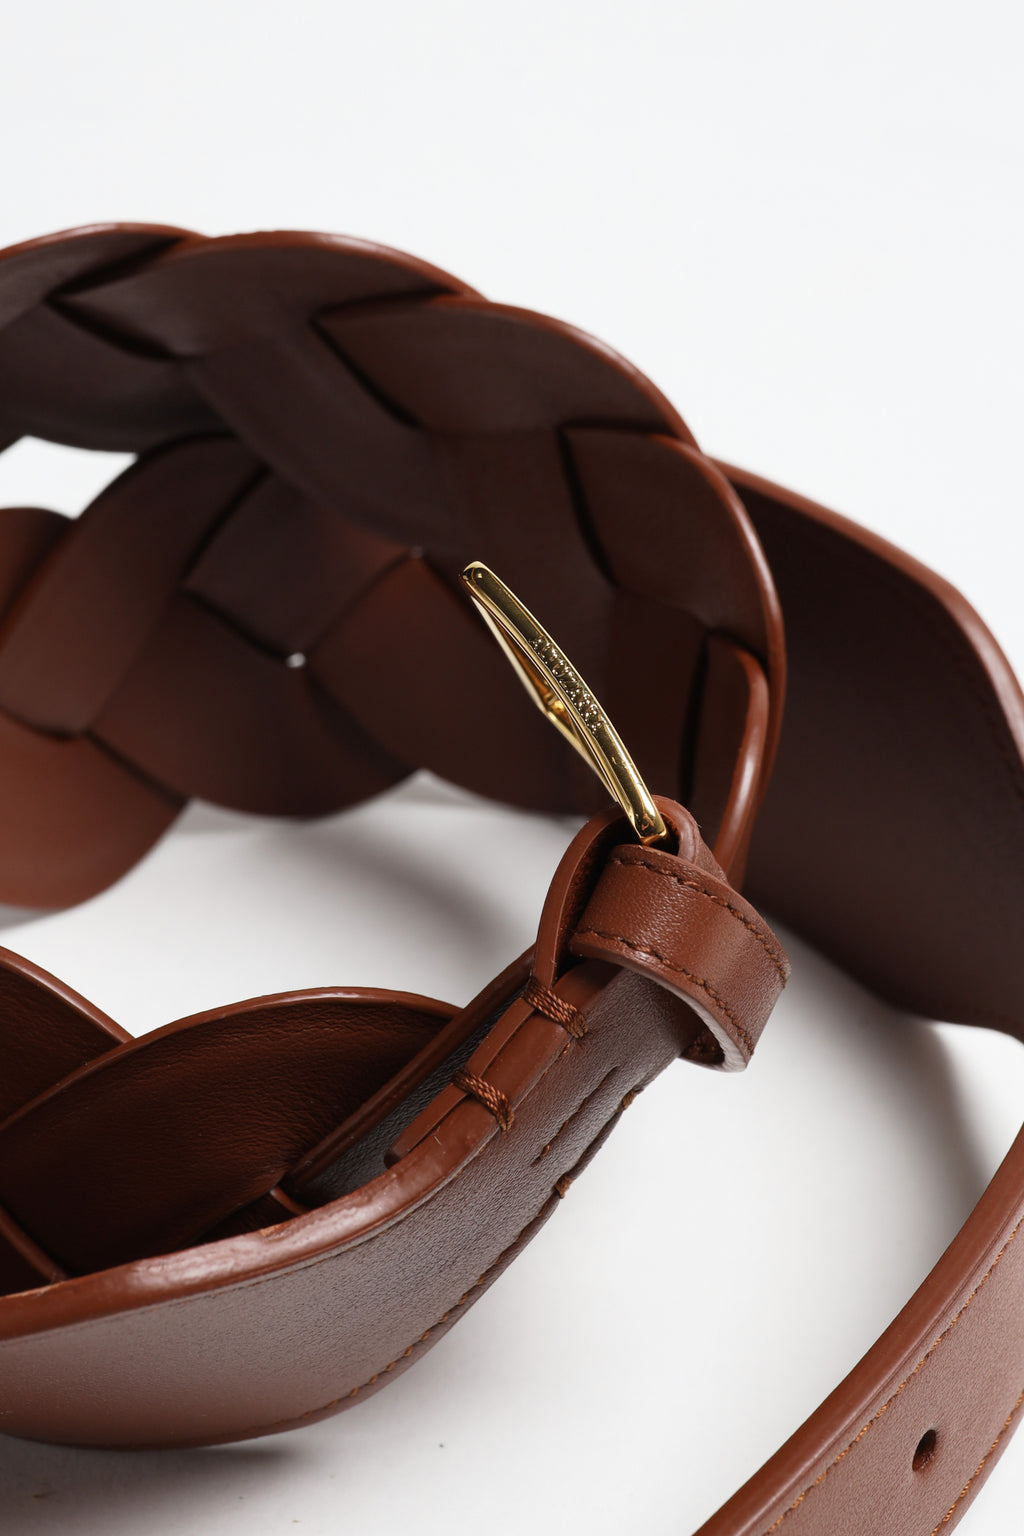 Loft Braided Leather Belt Size Medium Cognac Women's